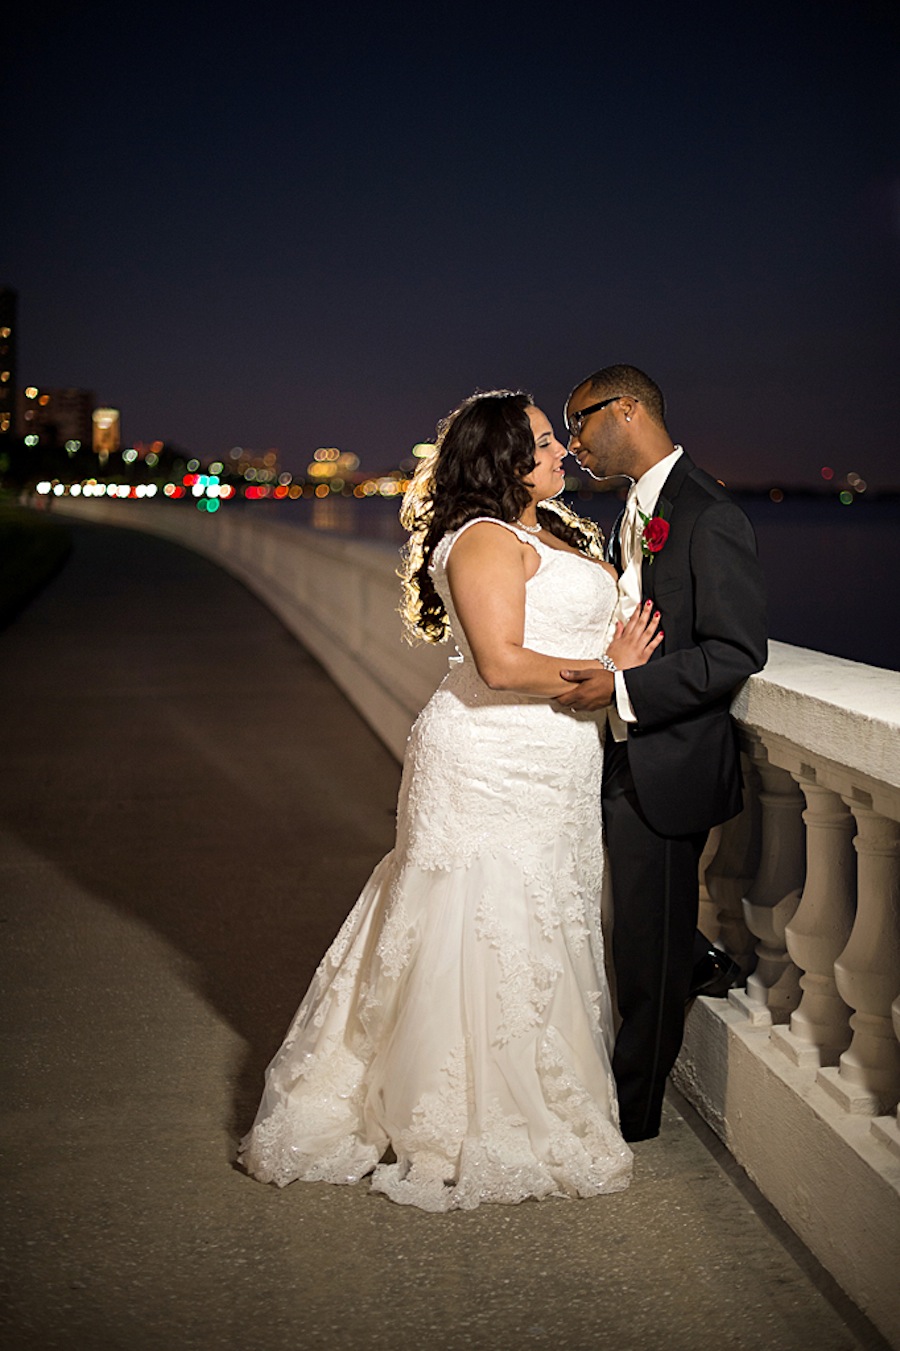 Bayshore Bride & Groom Portrait at Night on Wedding Day | Corey Conroy Photography